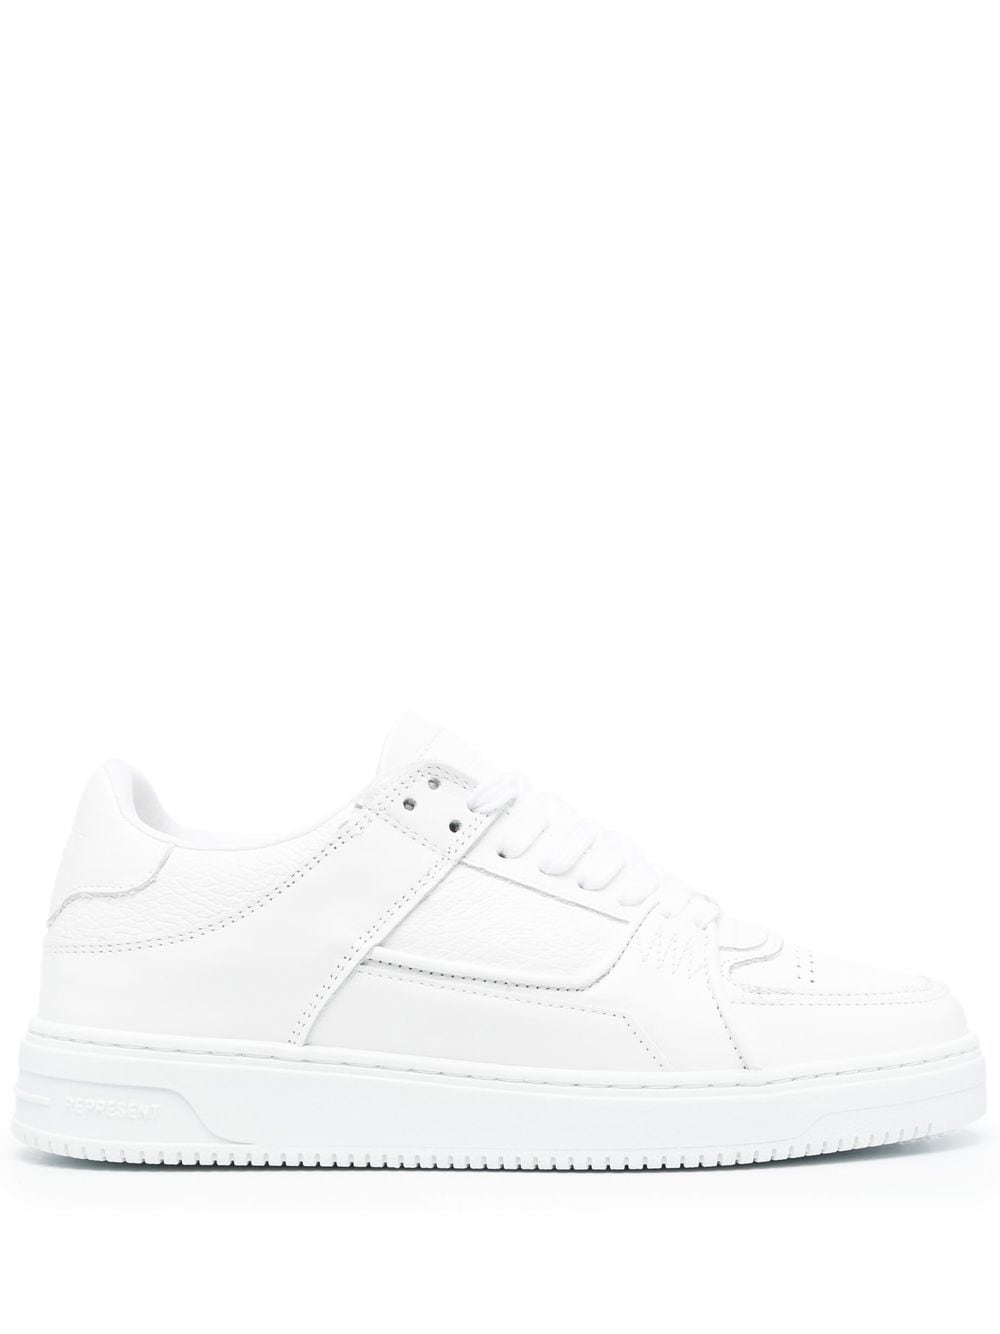 Represent Mocha low-top sneakers - White von Represent